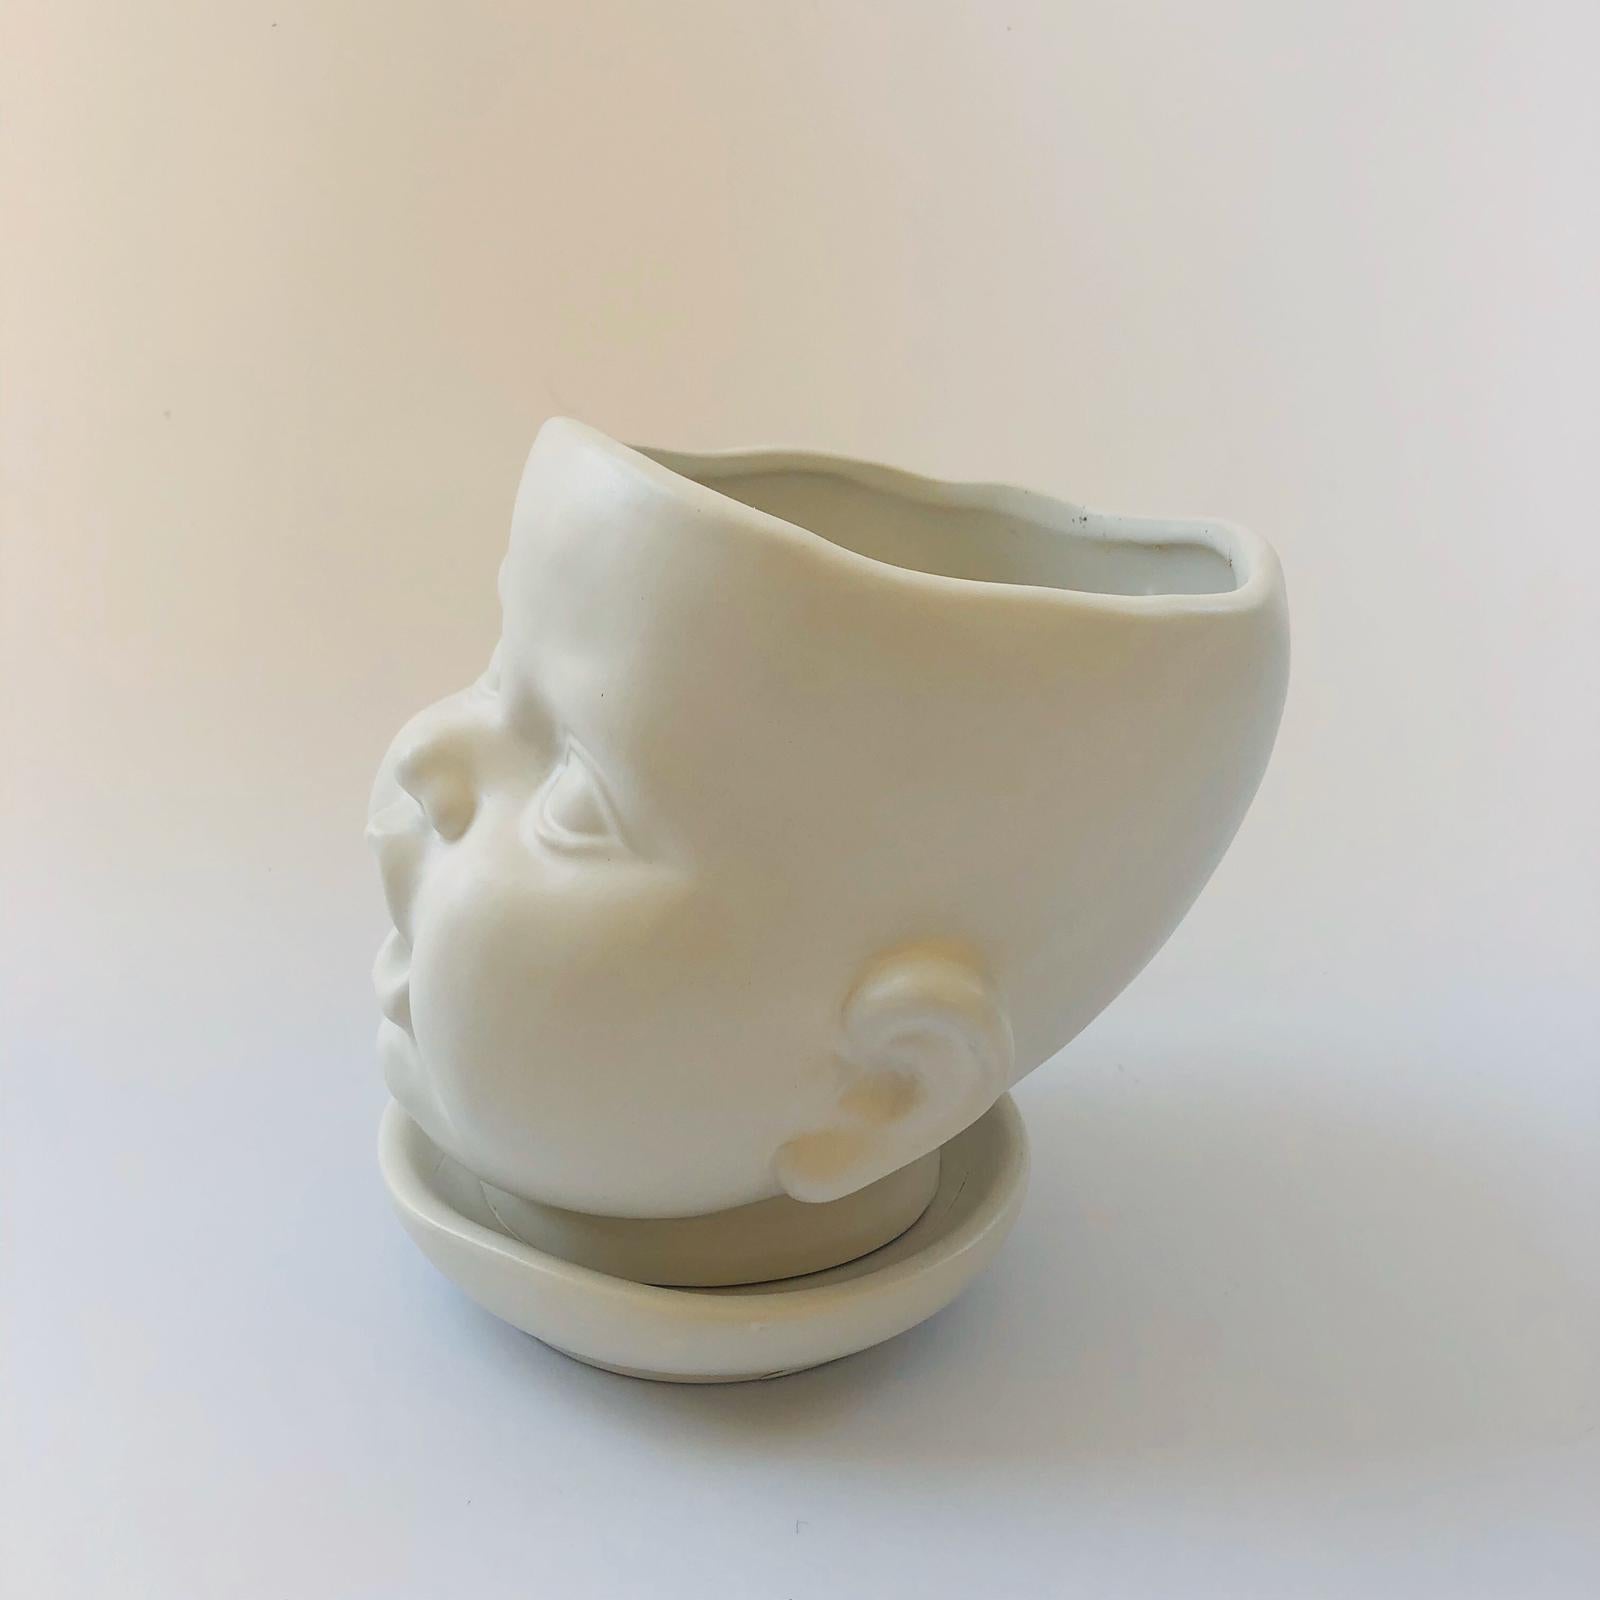 Large Ceramic Baby Face Plant Pot - ad&i